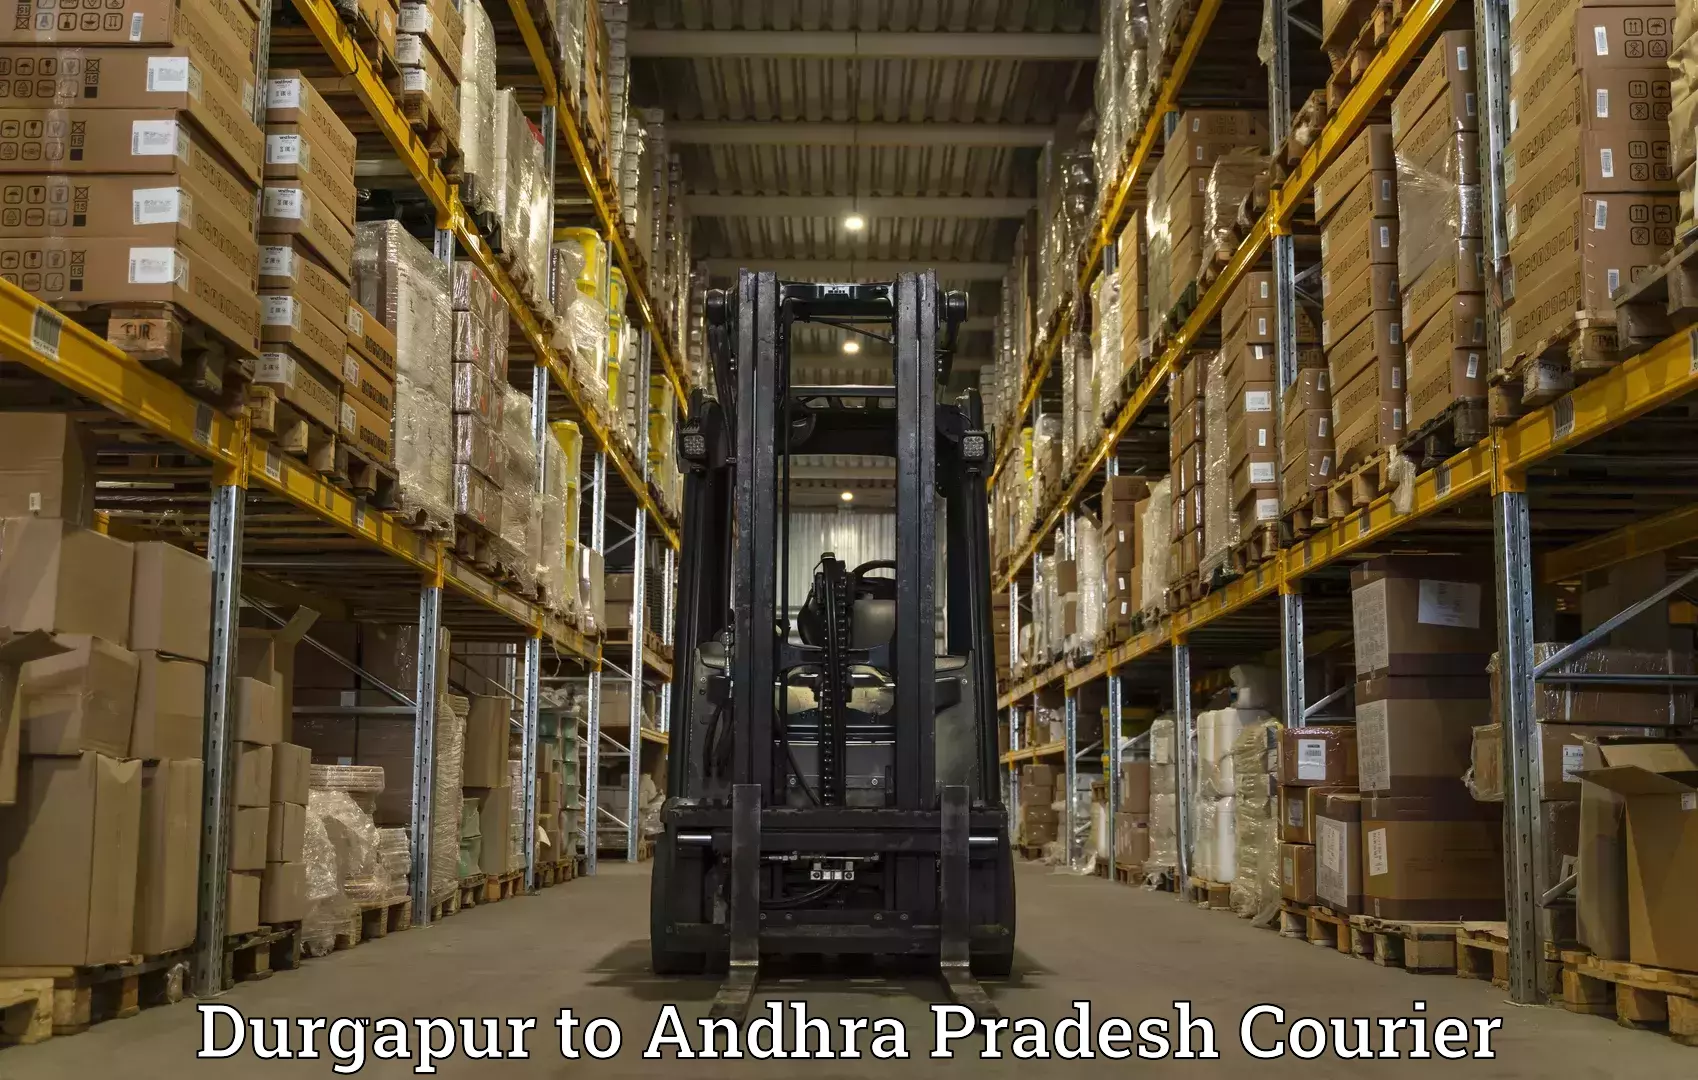 High-priority parcel service Durgapur to Gopalapuram